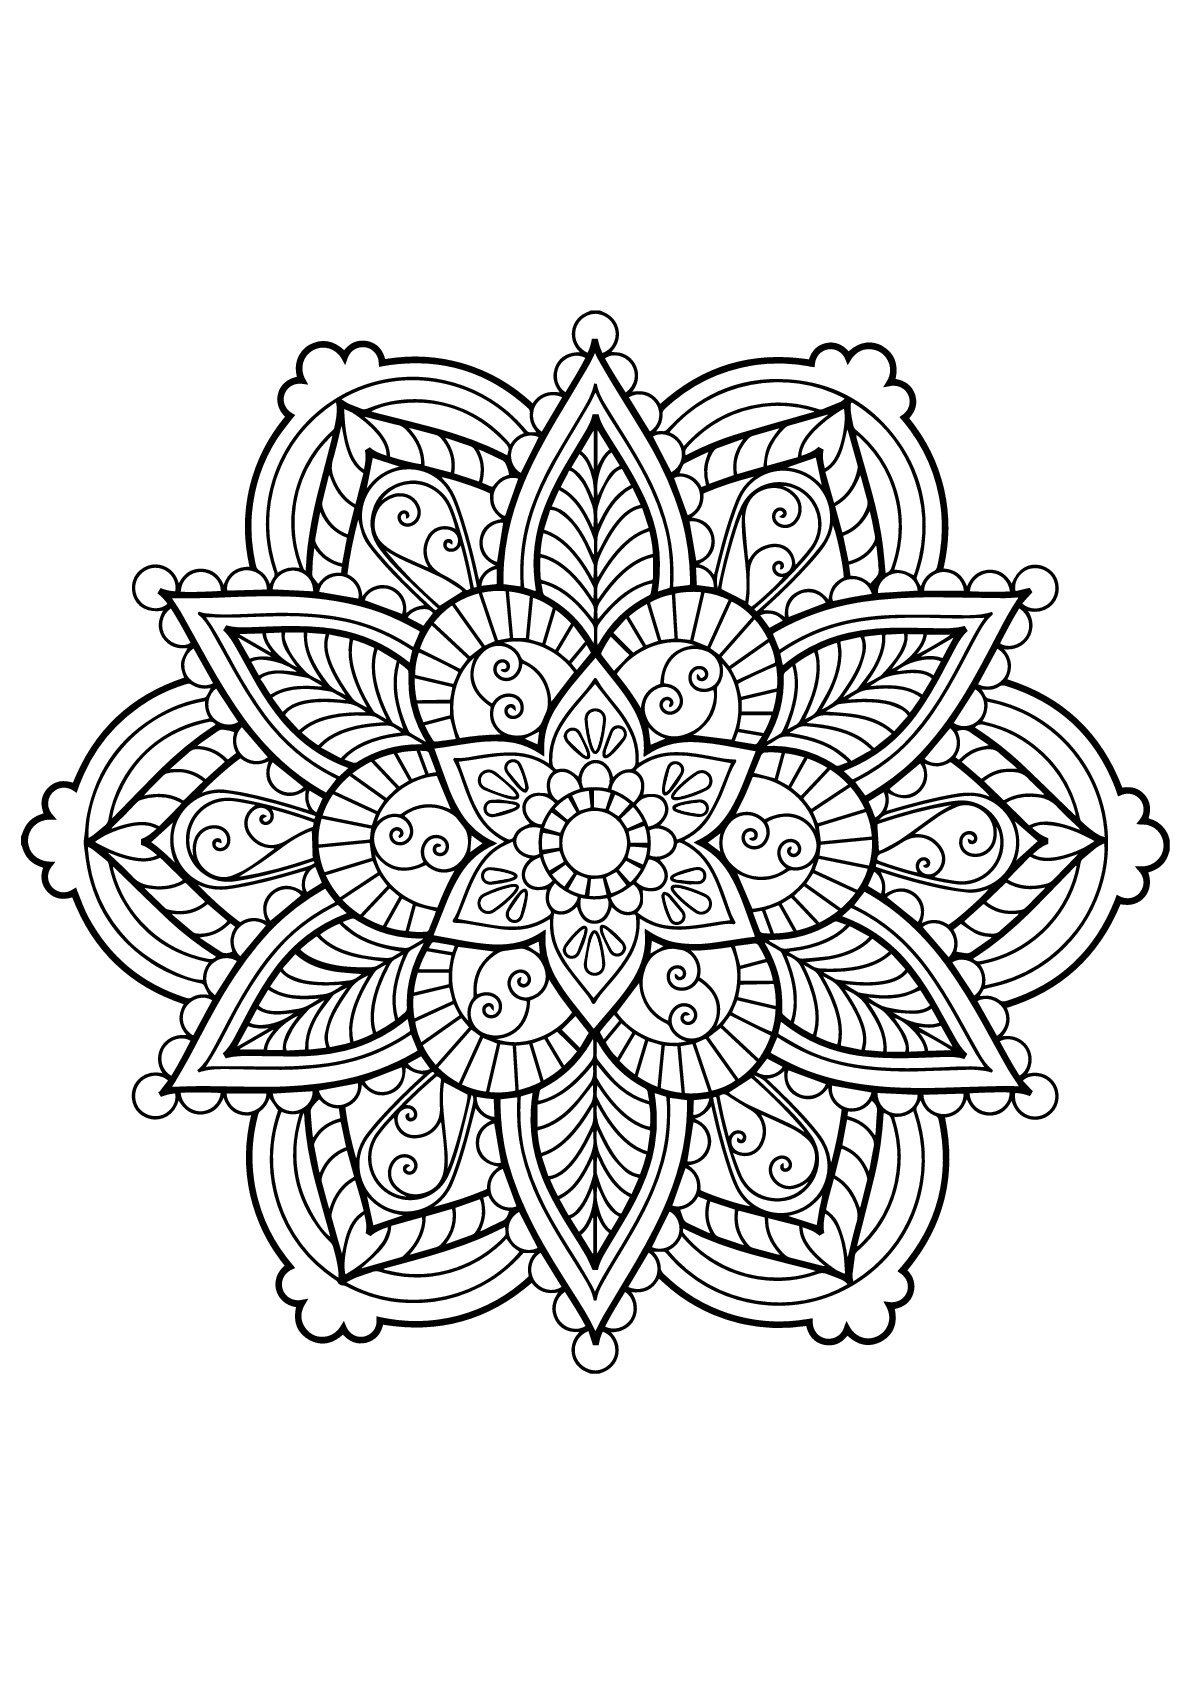 Mandala de elegantes flores - Mandalas - Colorear para Adultos